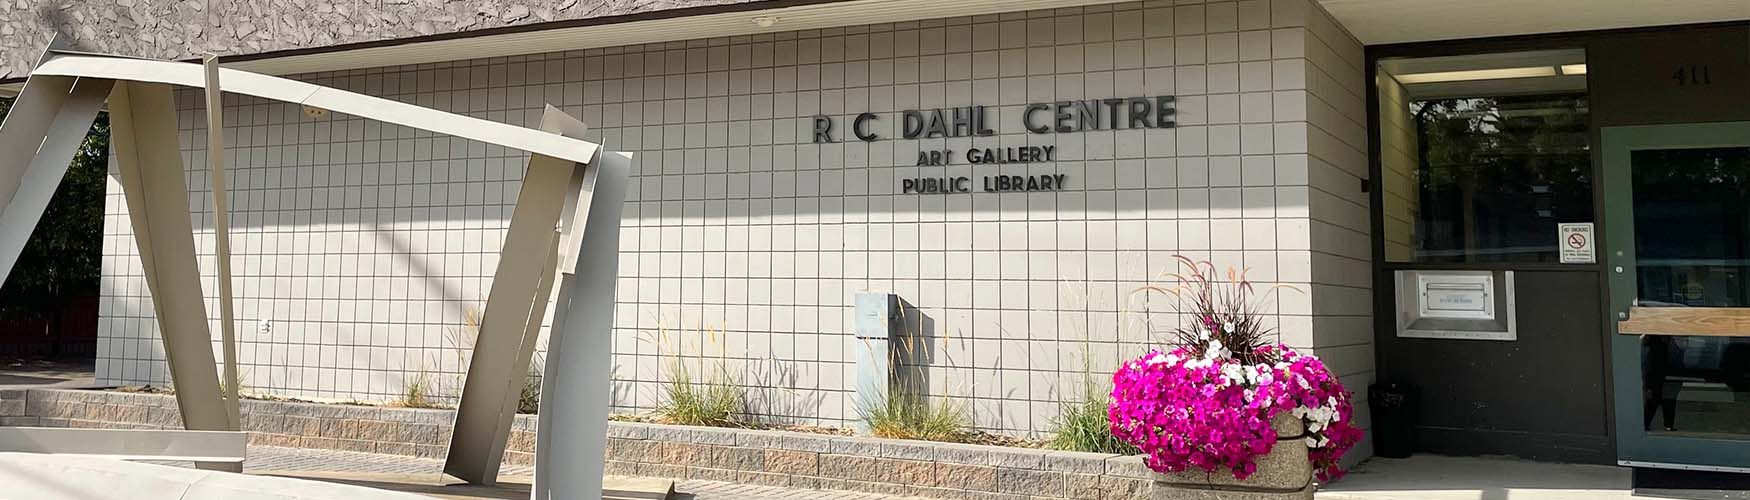 R.C Dahl Centre